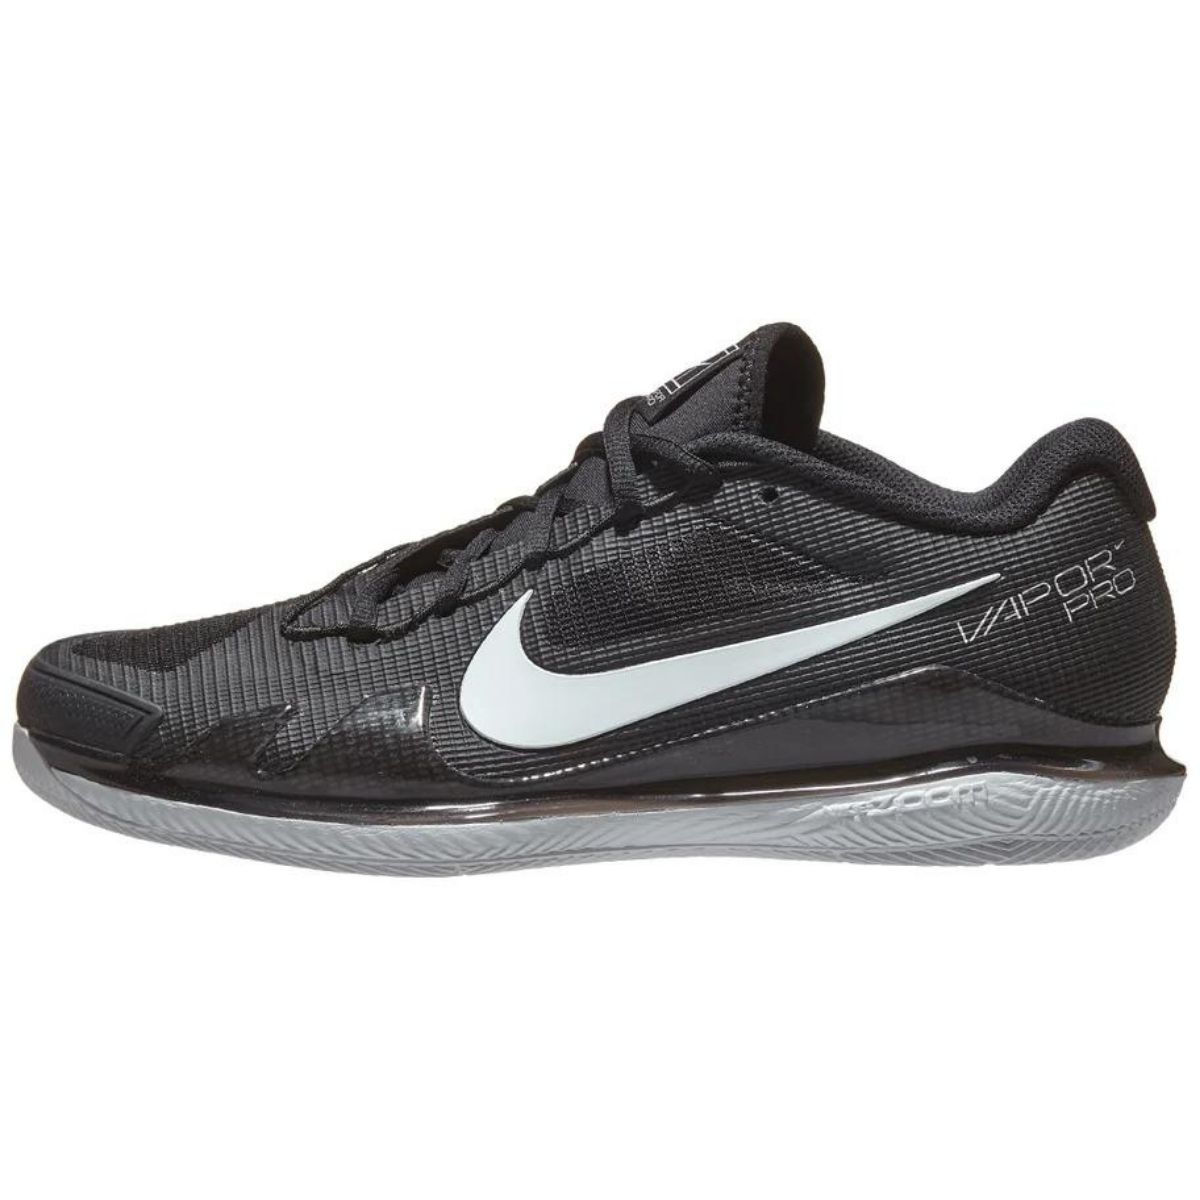 The Best Tennis Shoes Options: Nike Air Zoom Vapor Pro